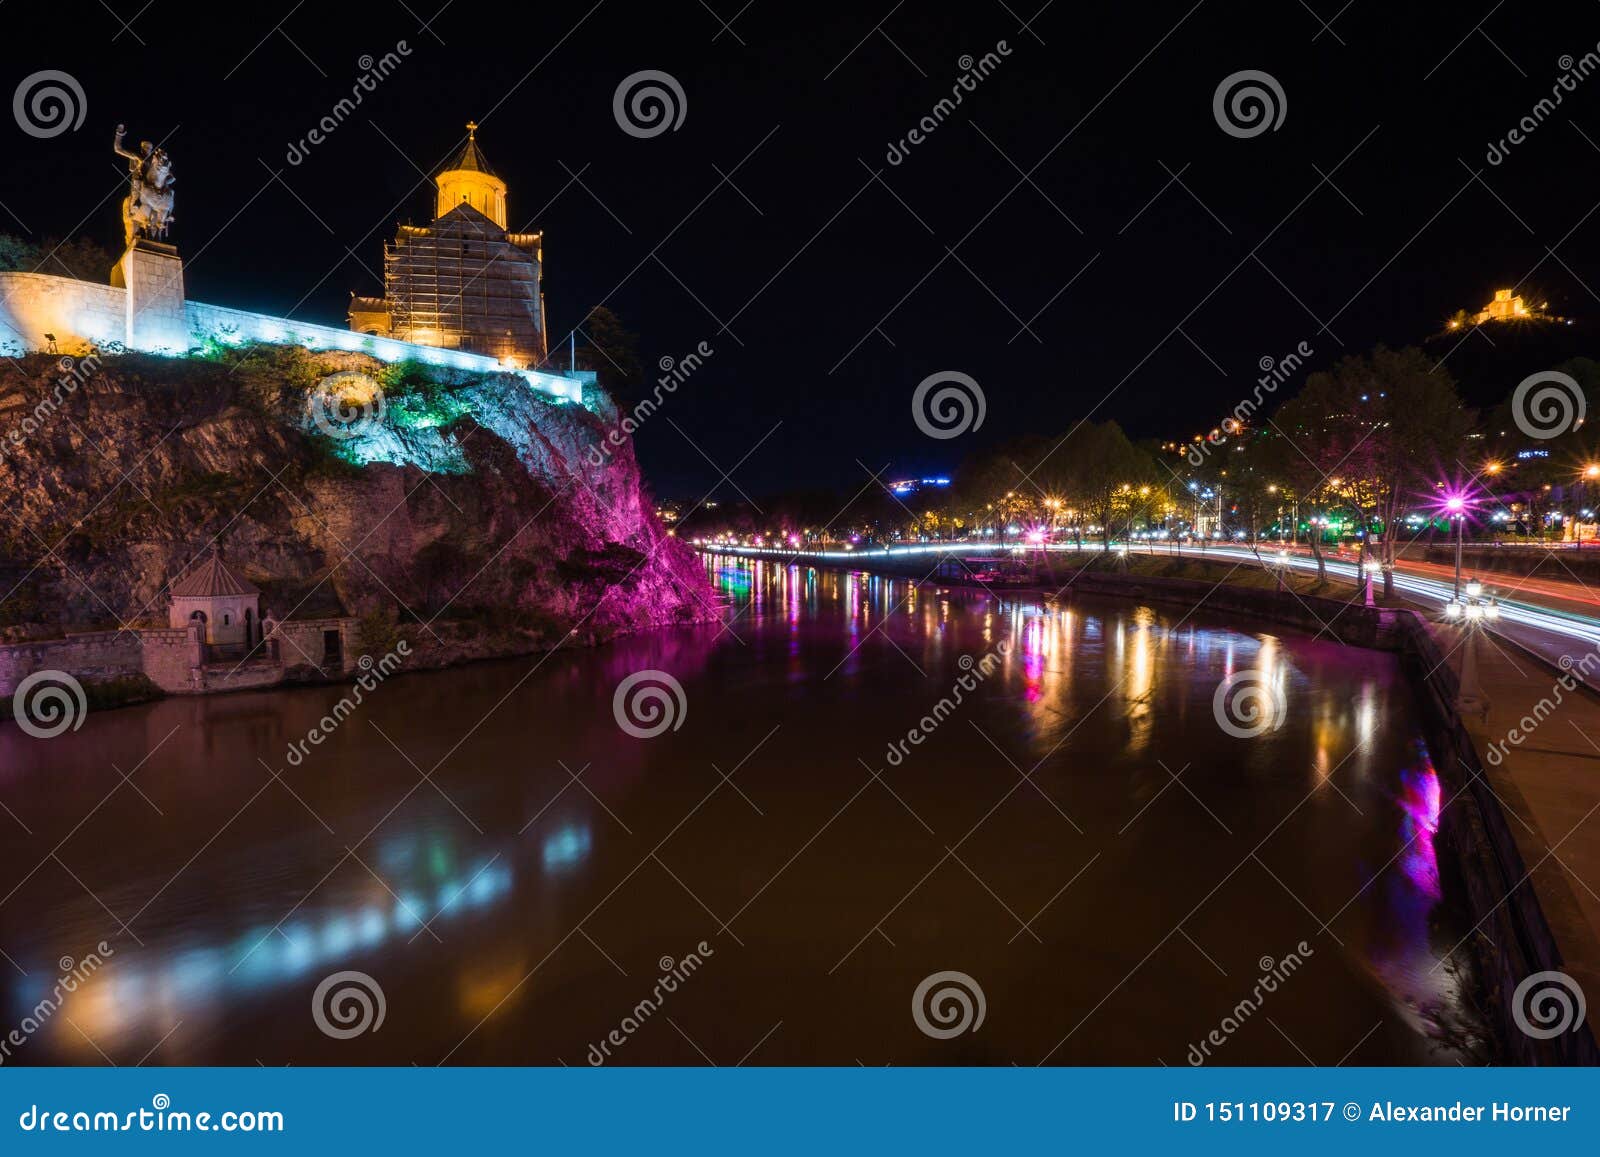 meteki church with river in front in tiflis at night